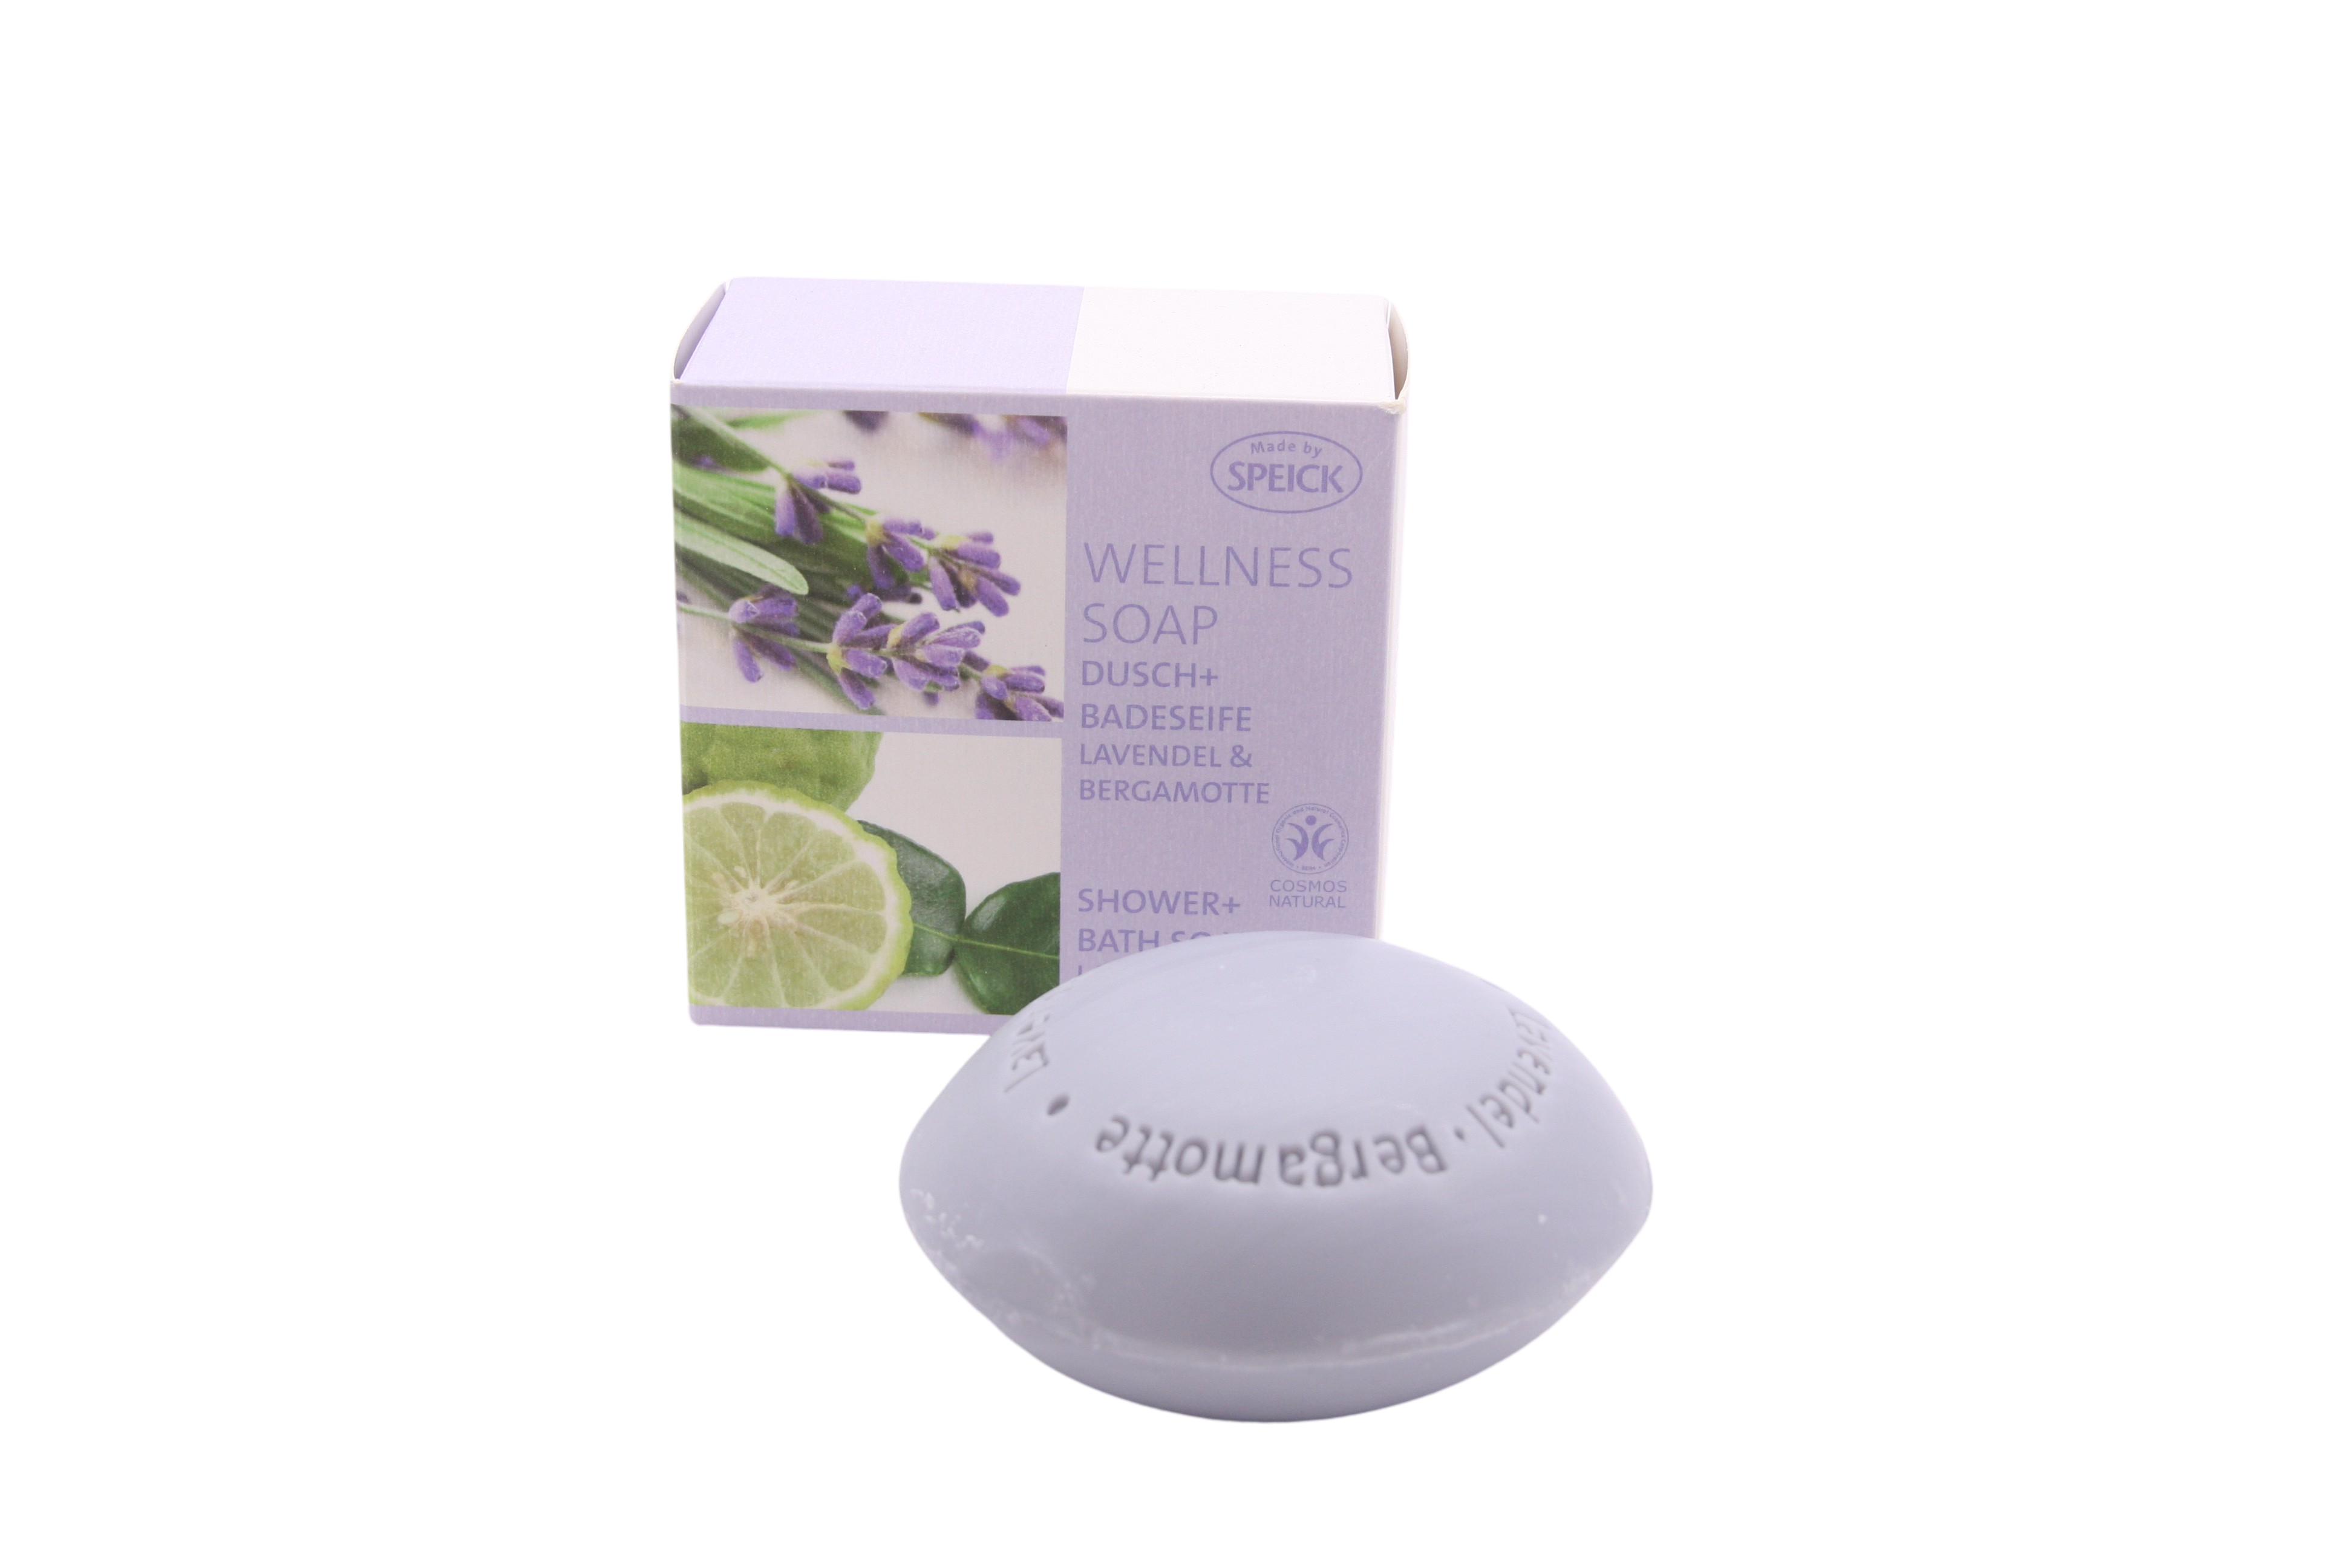 Dusch +  Badeseife  "Wellness" Lavendel Bergamotte